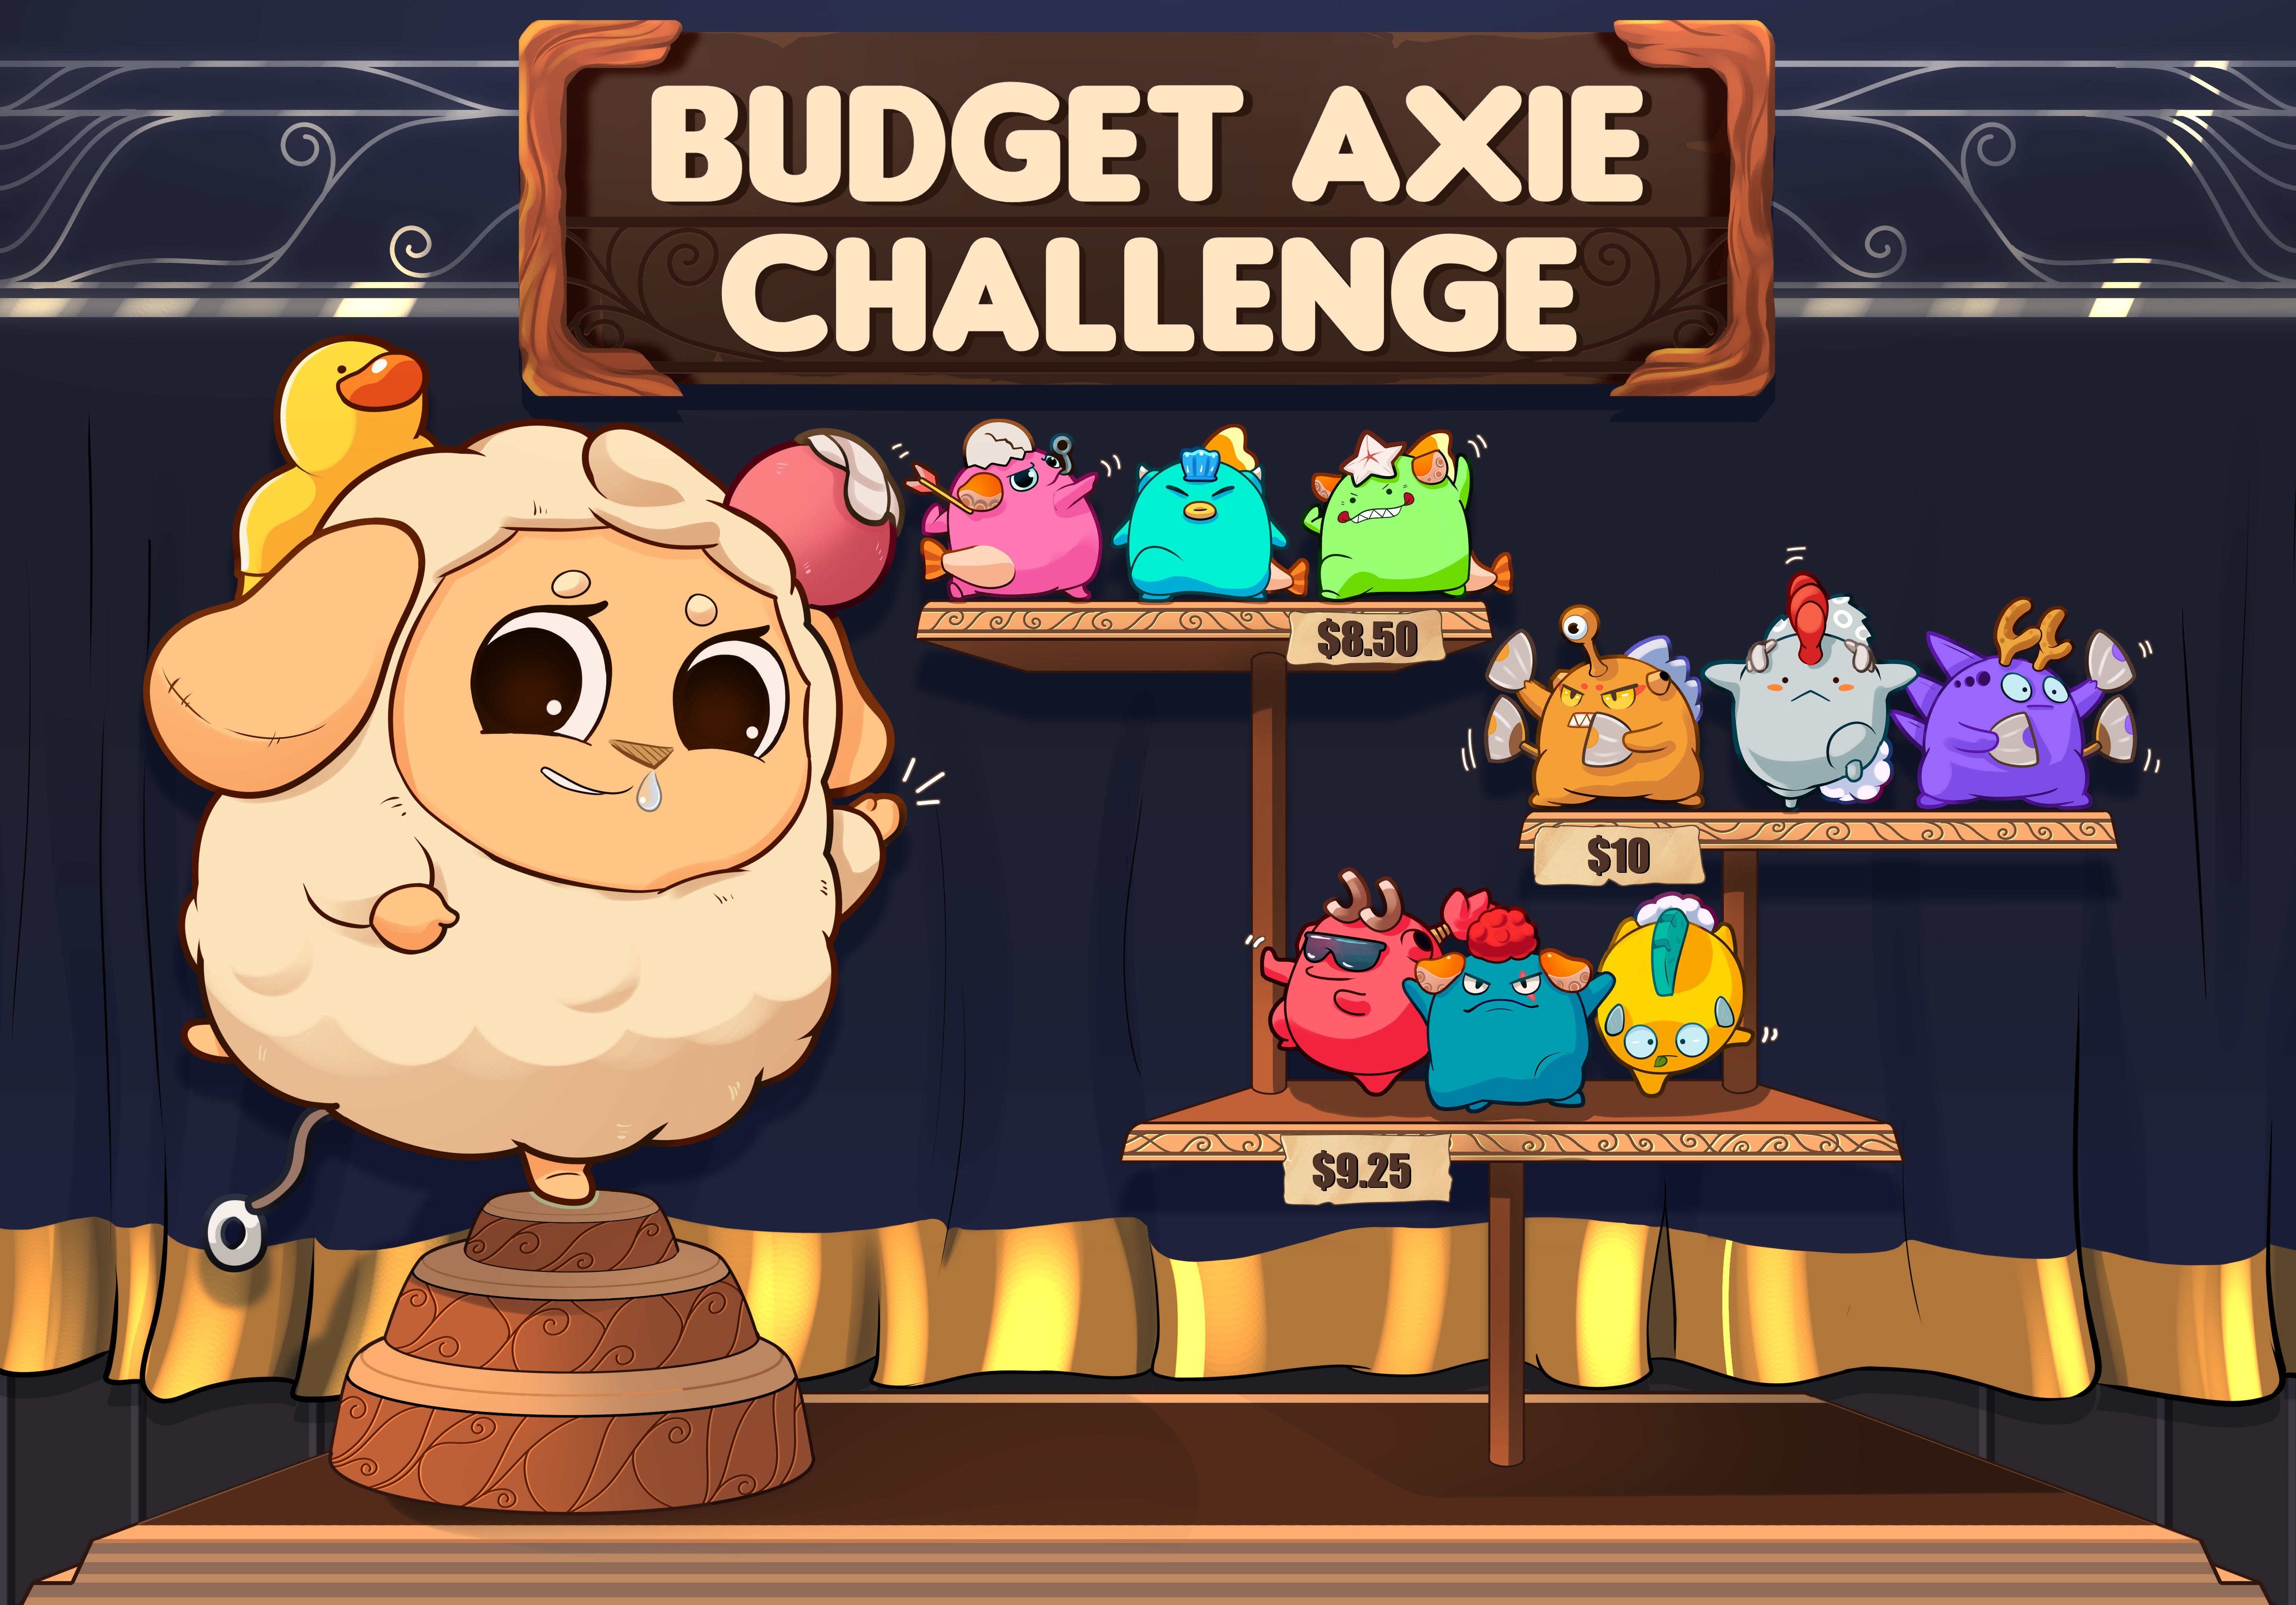 Budget Axie Challenge Winners